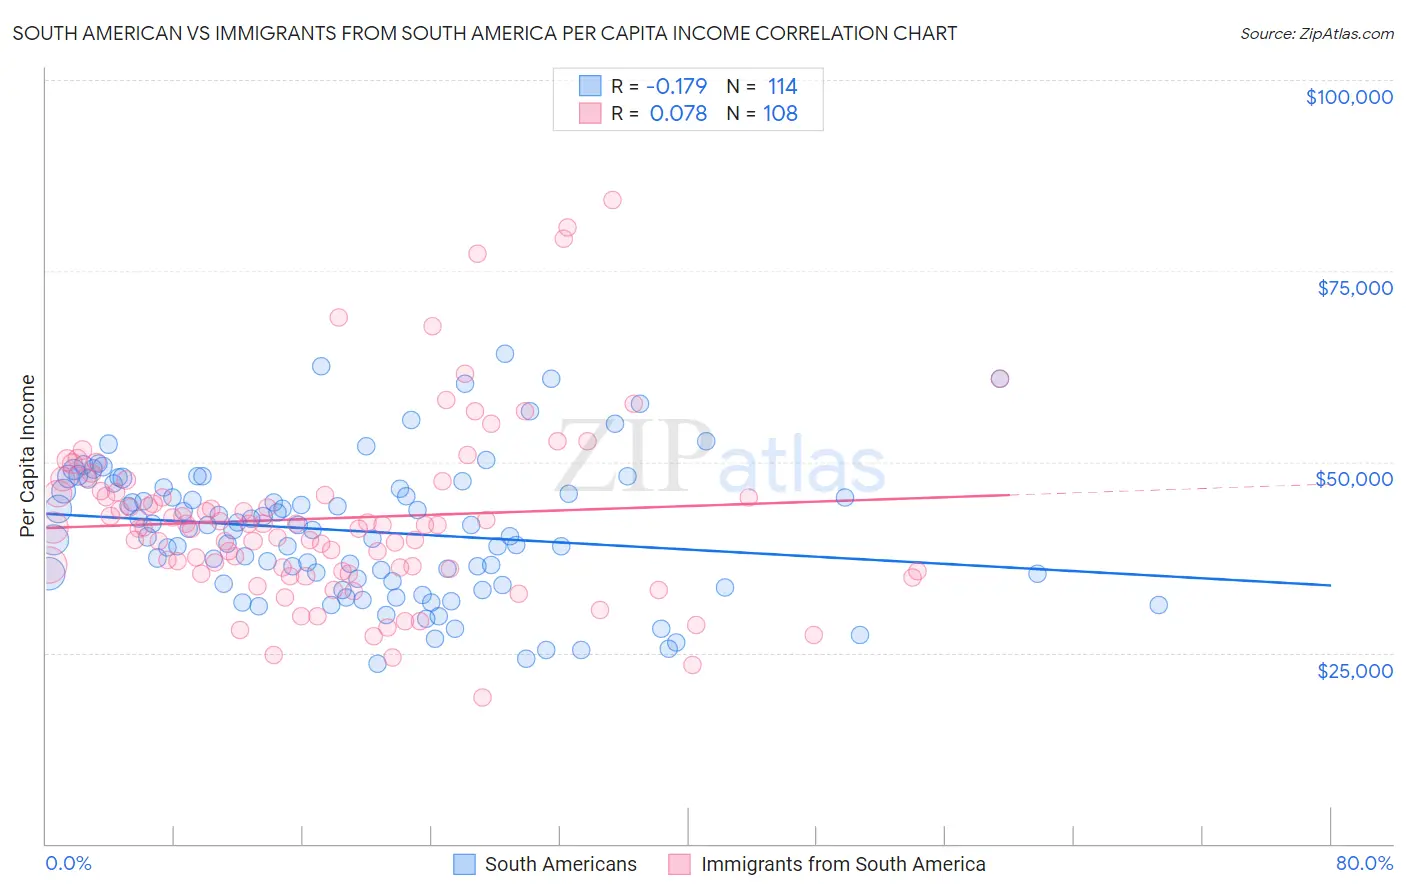 South American vs Immigrants from South America Per Capita Income